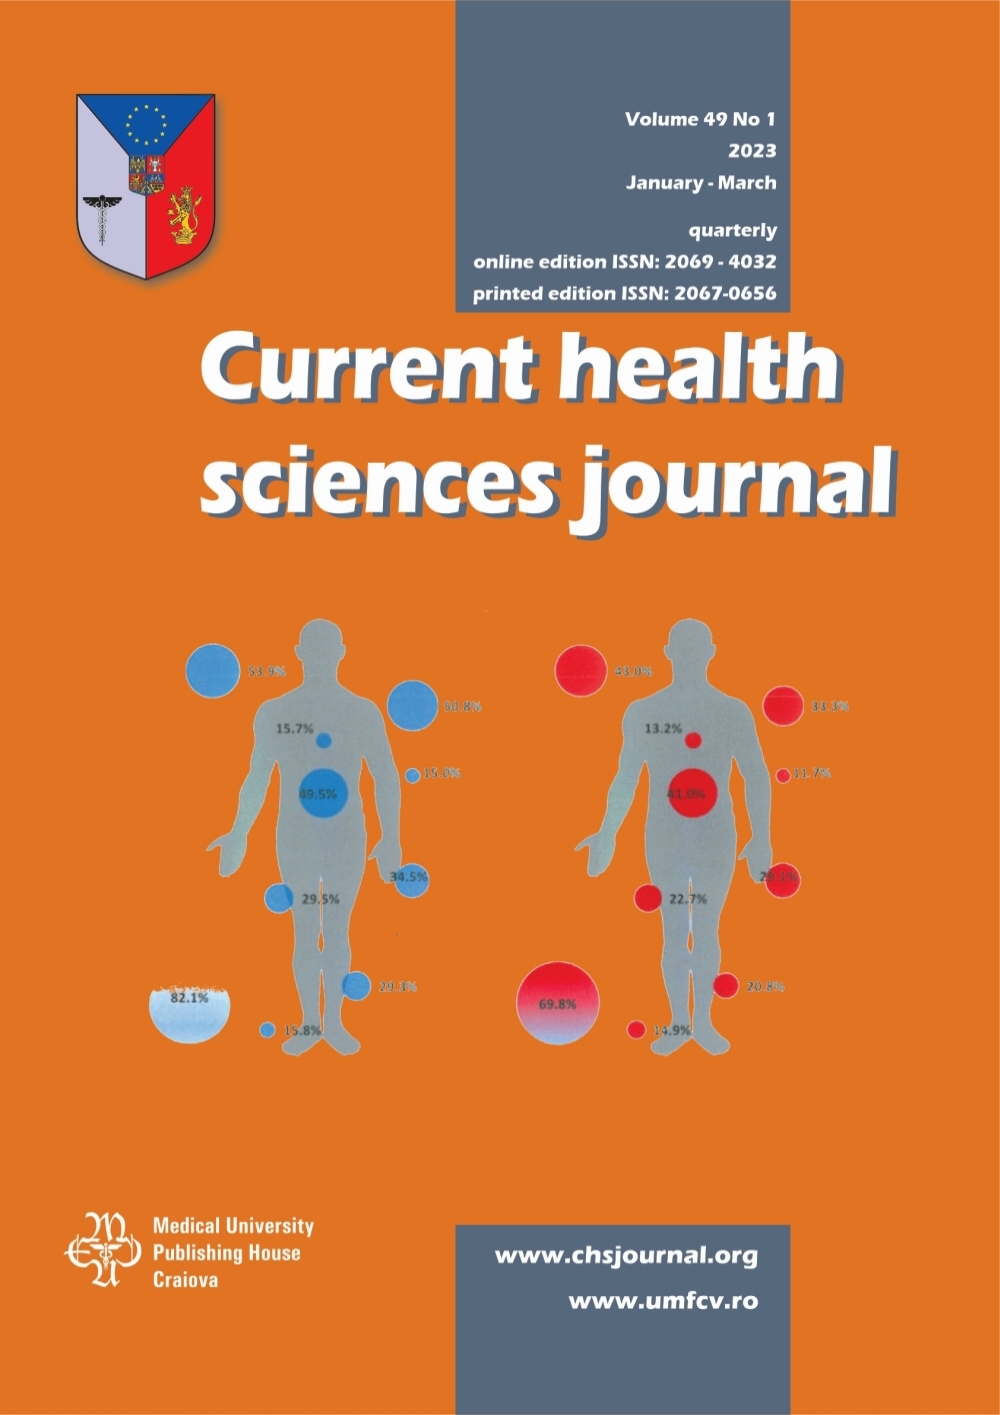 Current Health Sciences Journal, vol. 49 no. 1, 2023